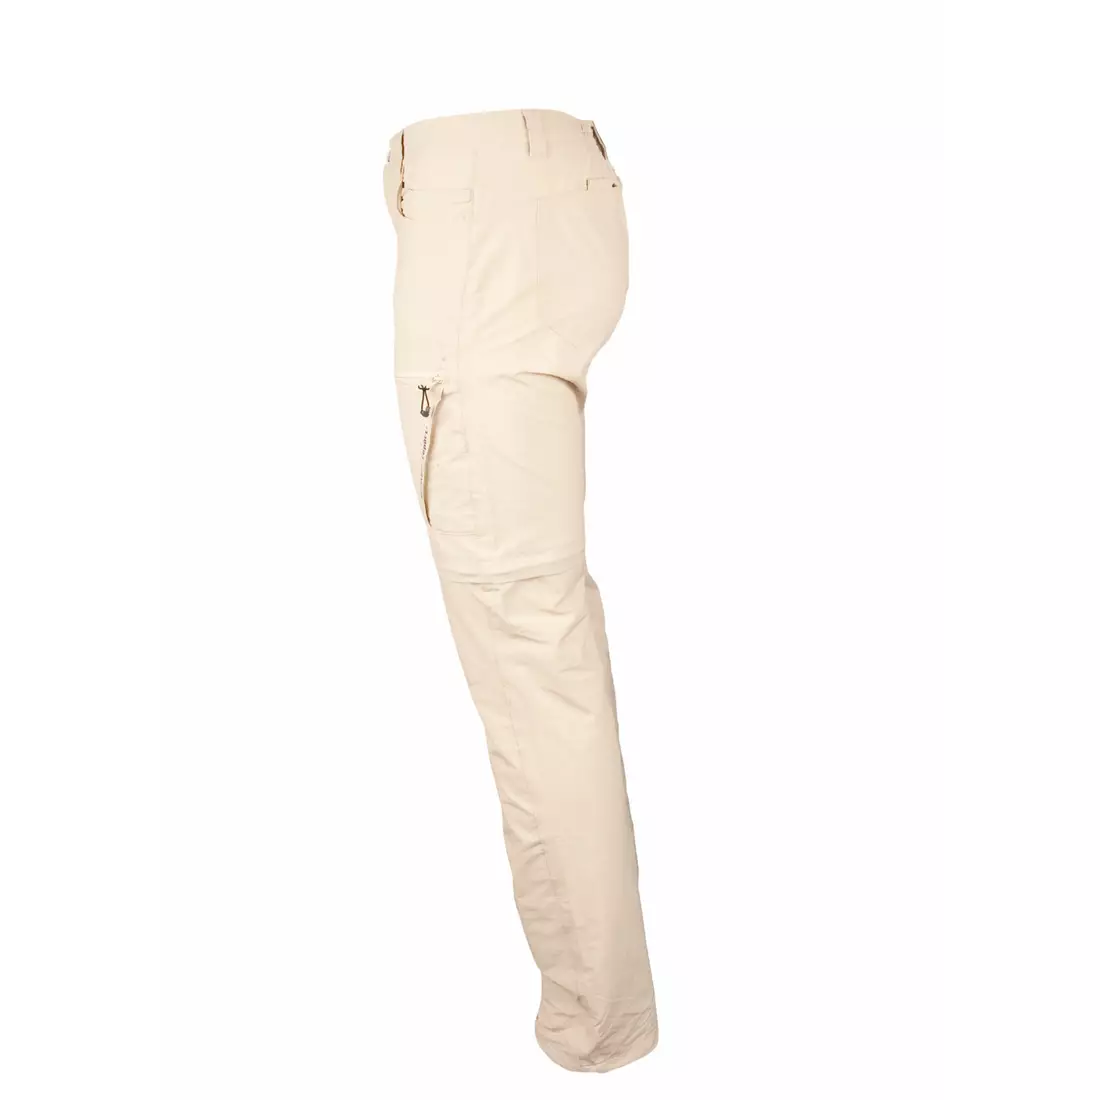 WEATHER REPORT - ROLANDO - men's sports pants with detachable legs, beige